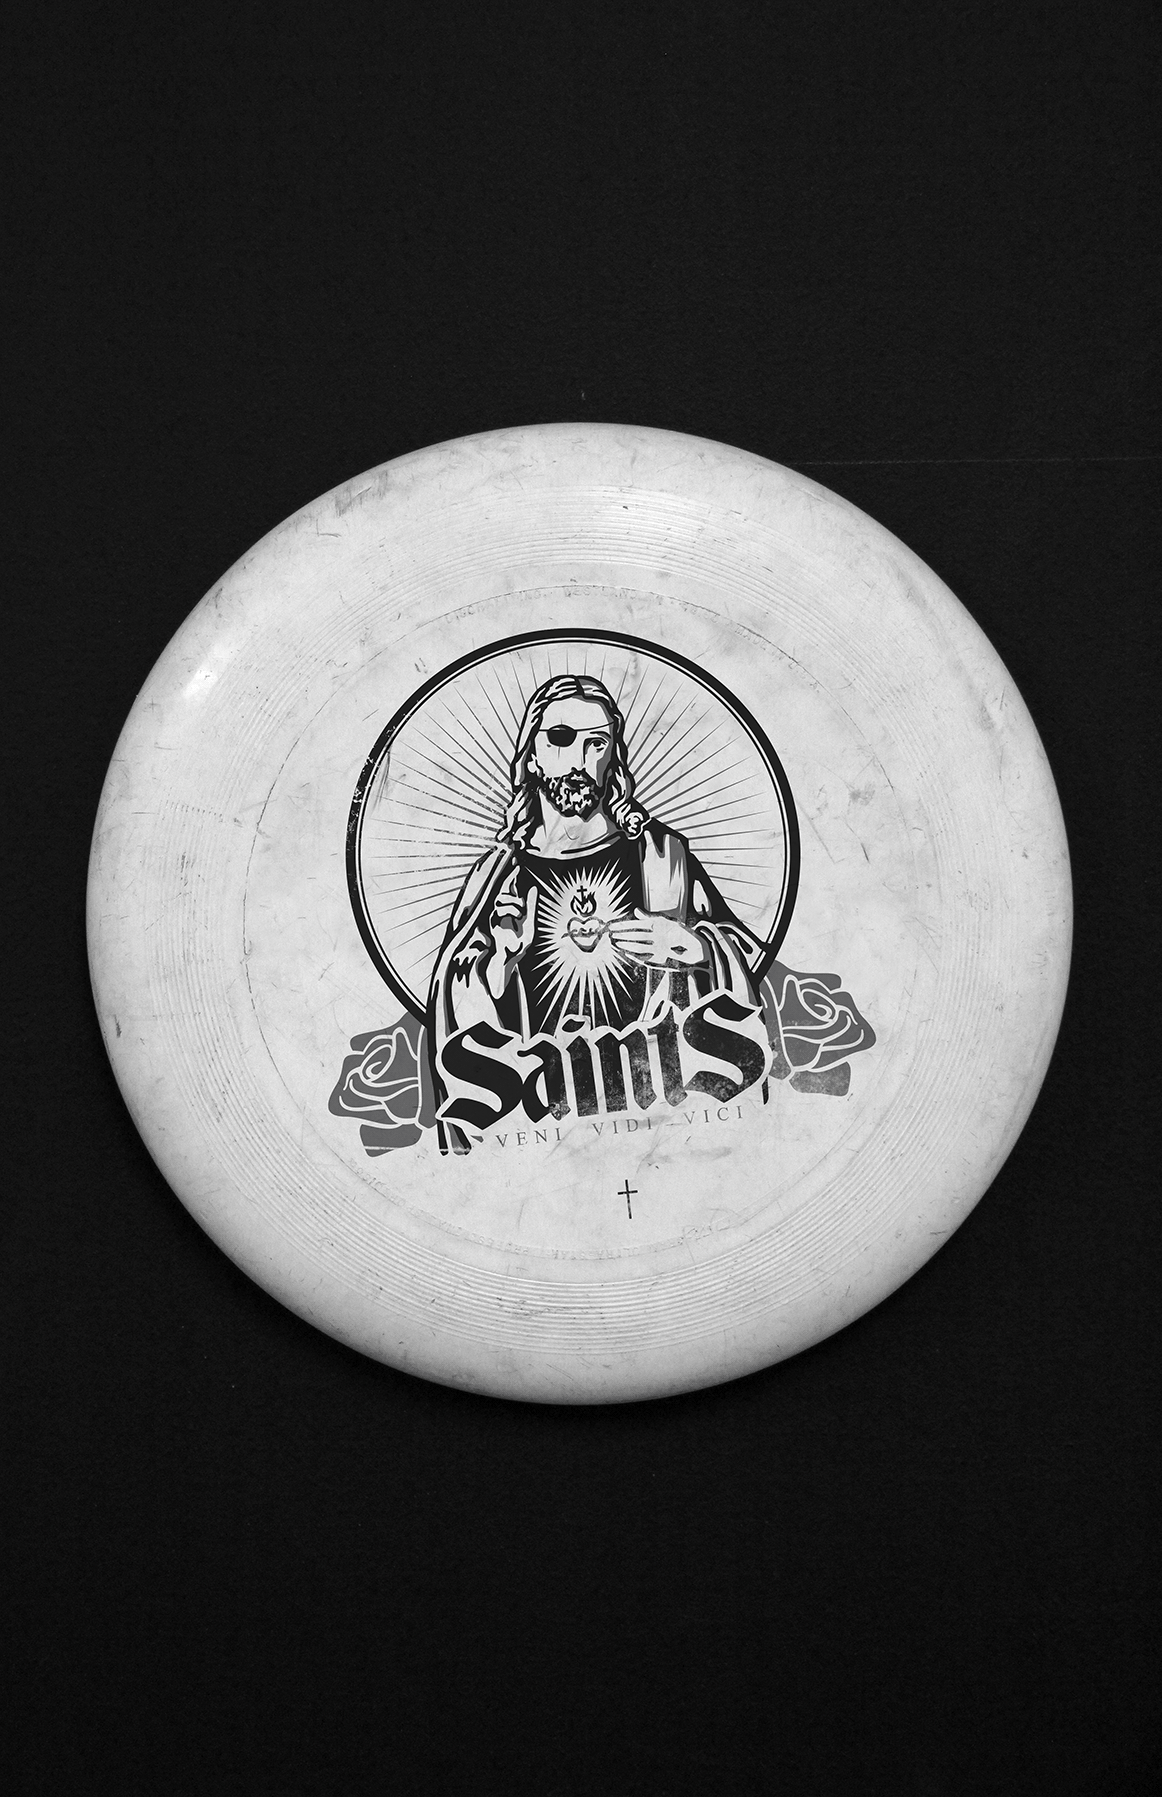 frisbee design logo saints jesus sport religion The Saints usj Ultimate ultimate frisbee game Fun